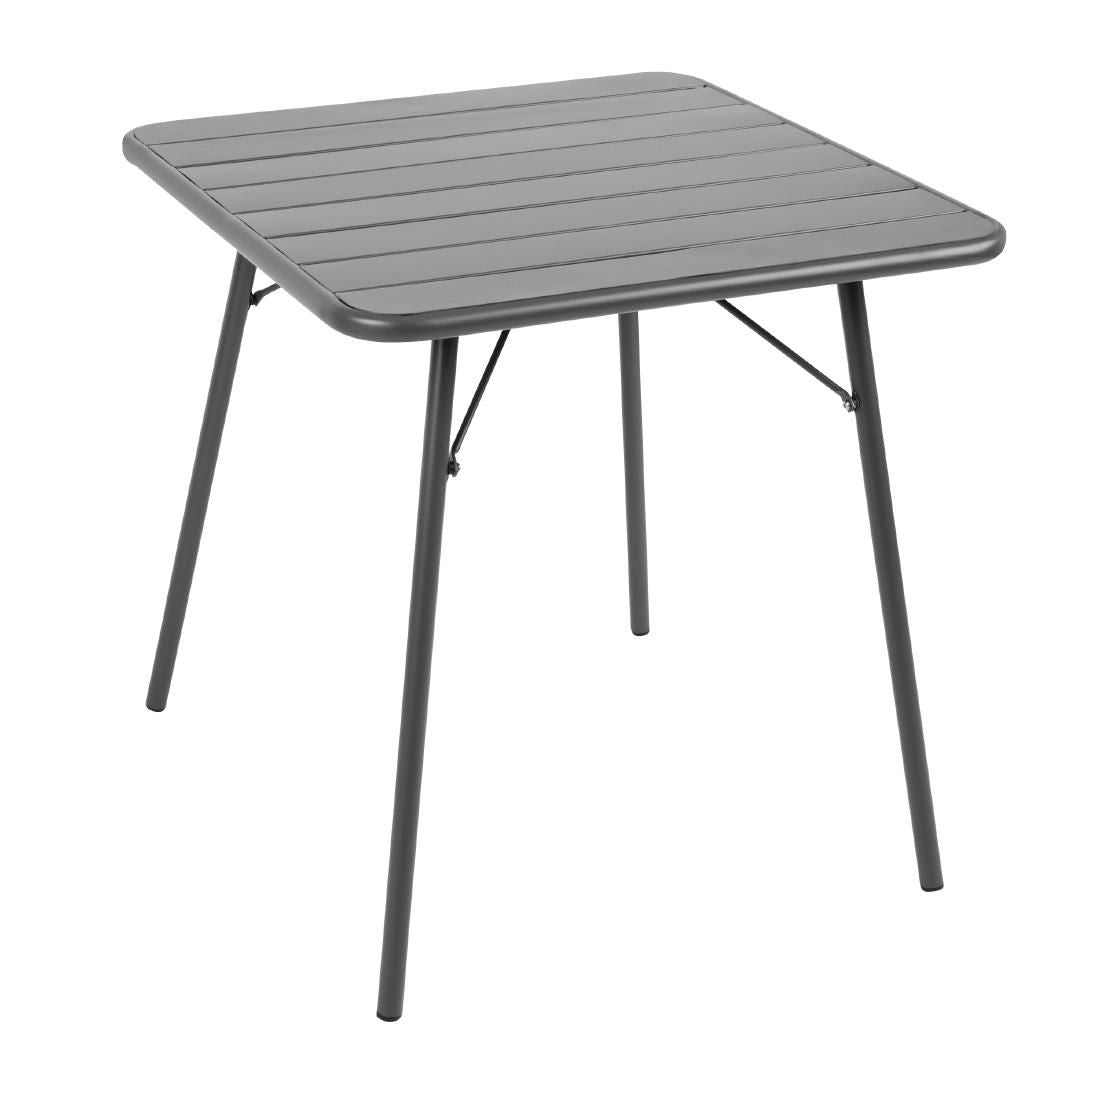 Bolero Square Slatted Steel Table 700mm JD Catering Equipment Solutions Ltd